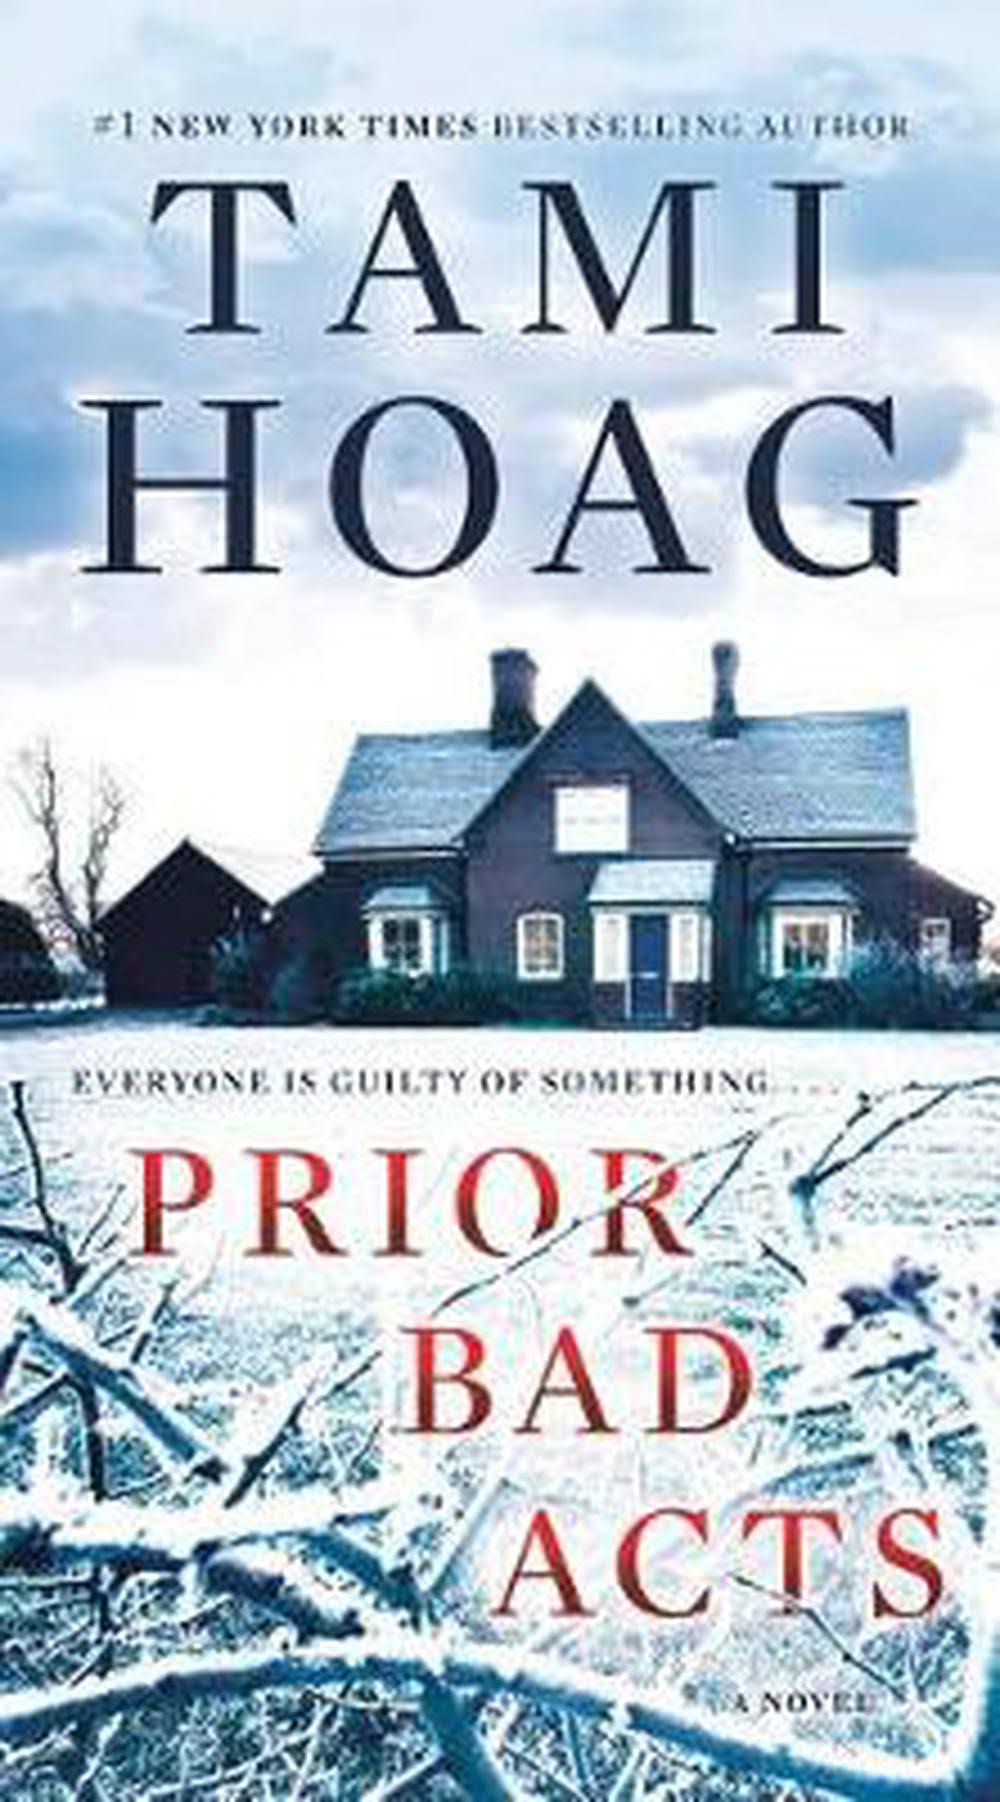 Prior Bad Acts - Tami Hoag